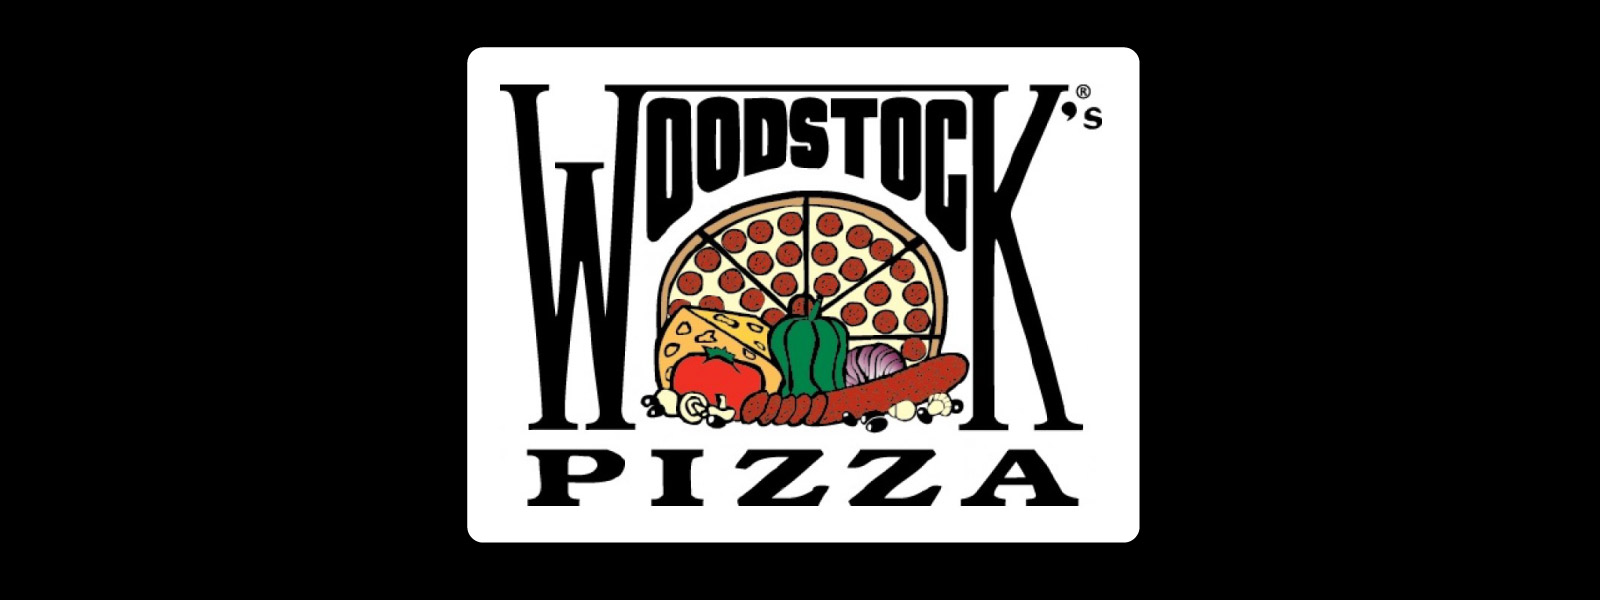 Woodstock-Pizza-header